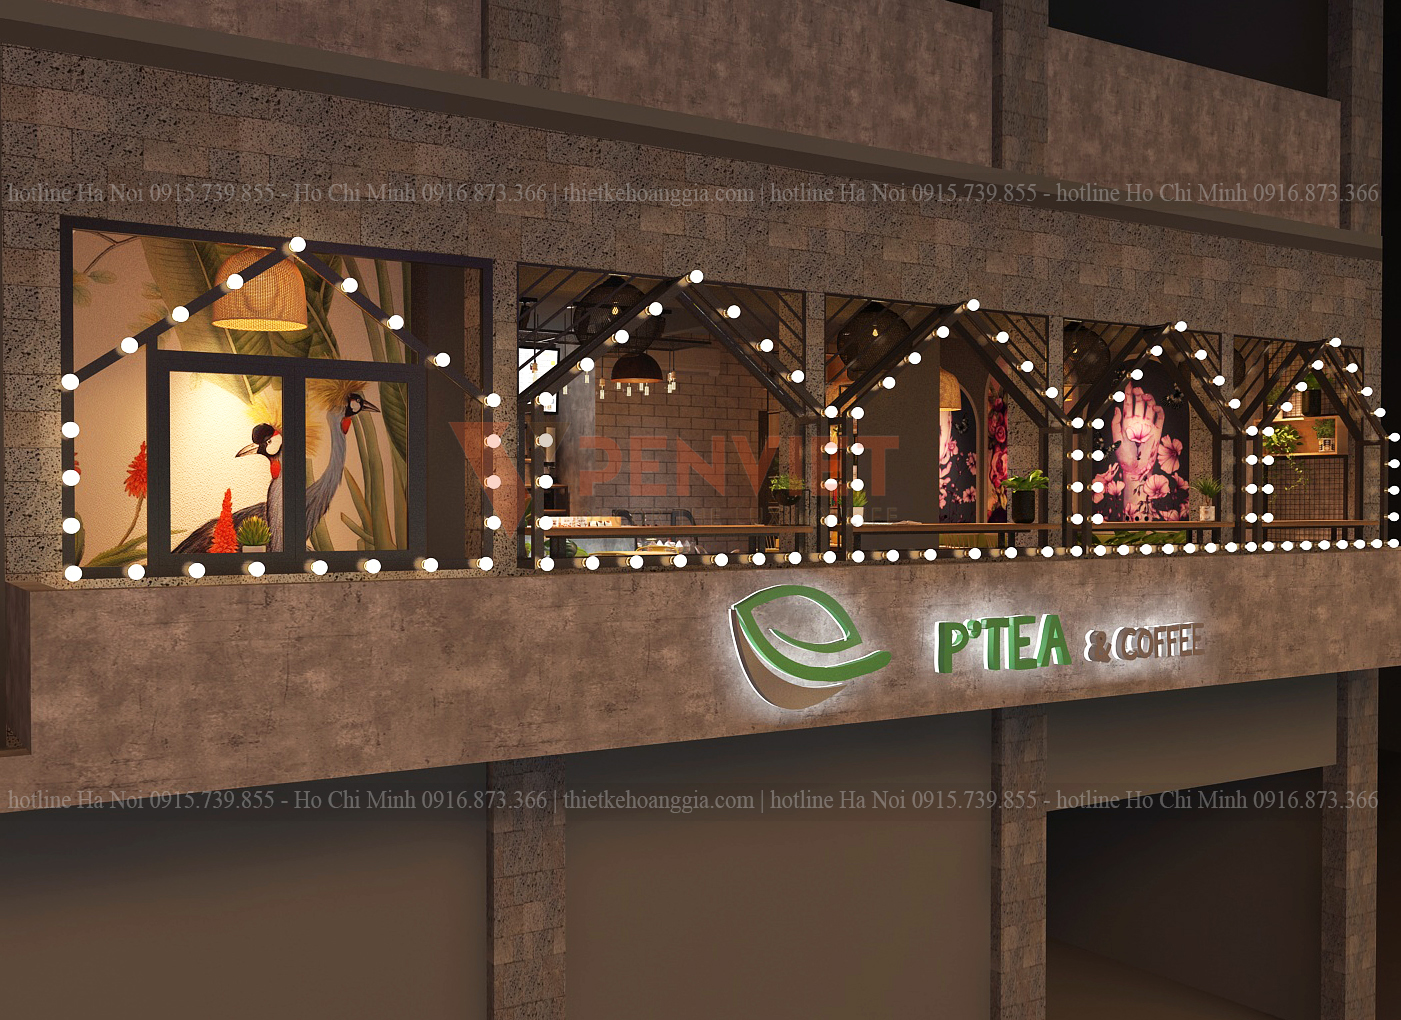 Thiết kế quán cafe ptea